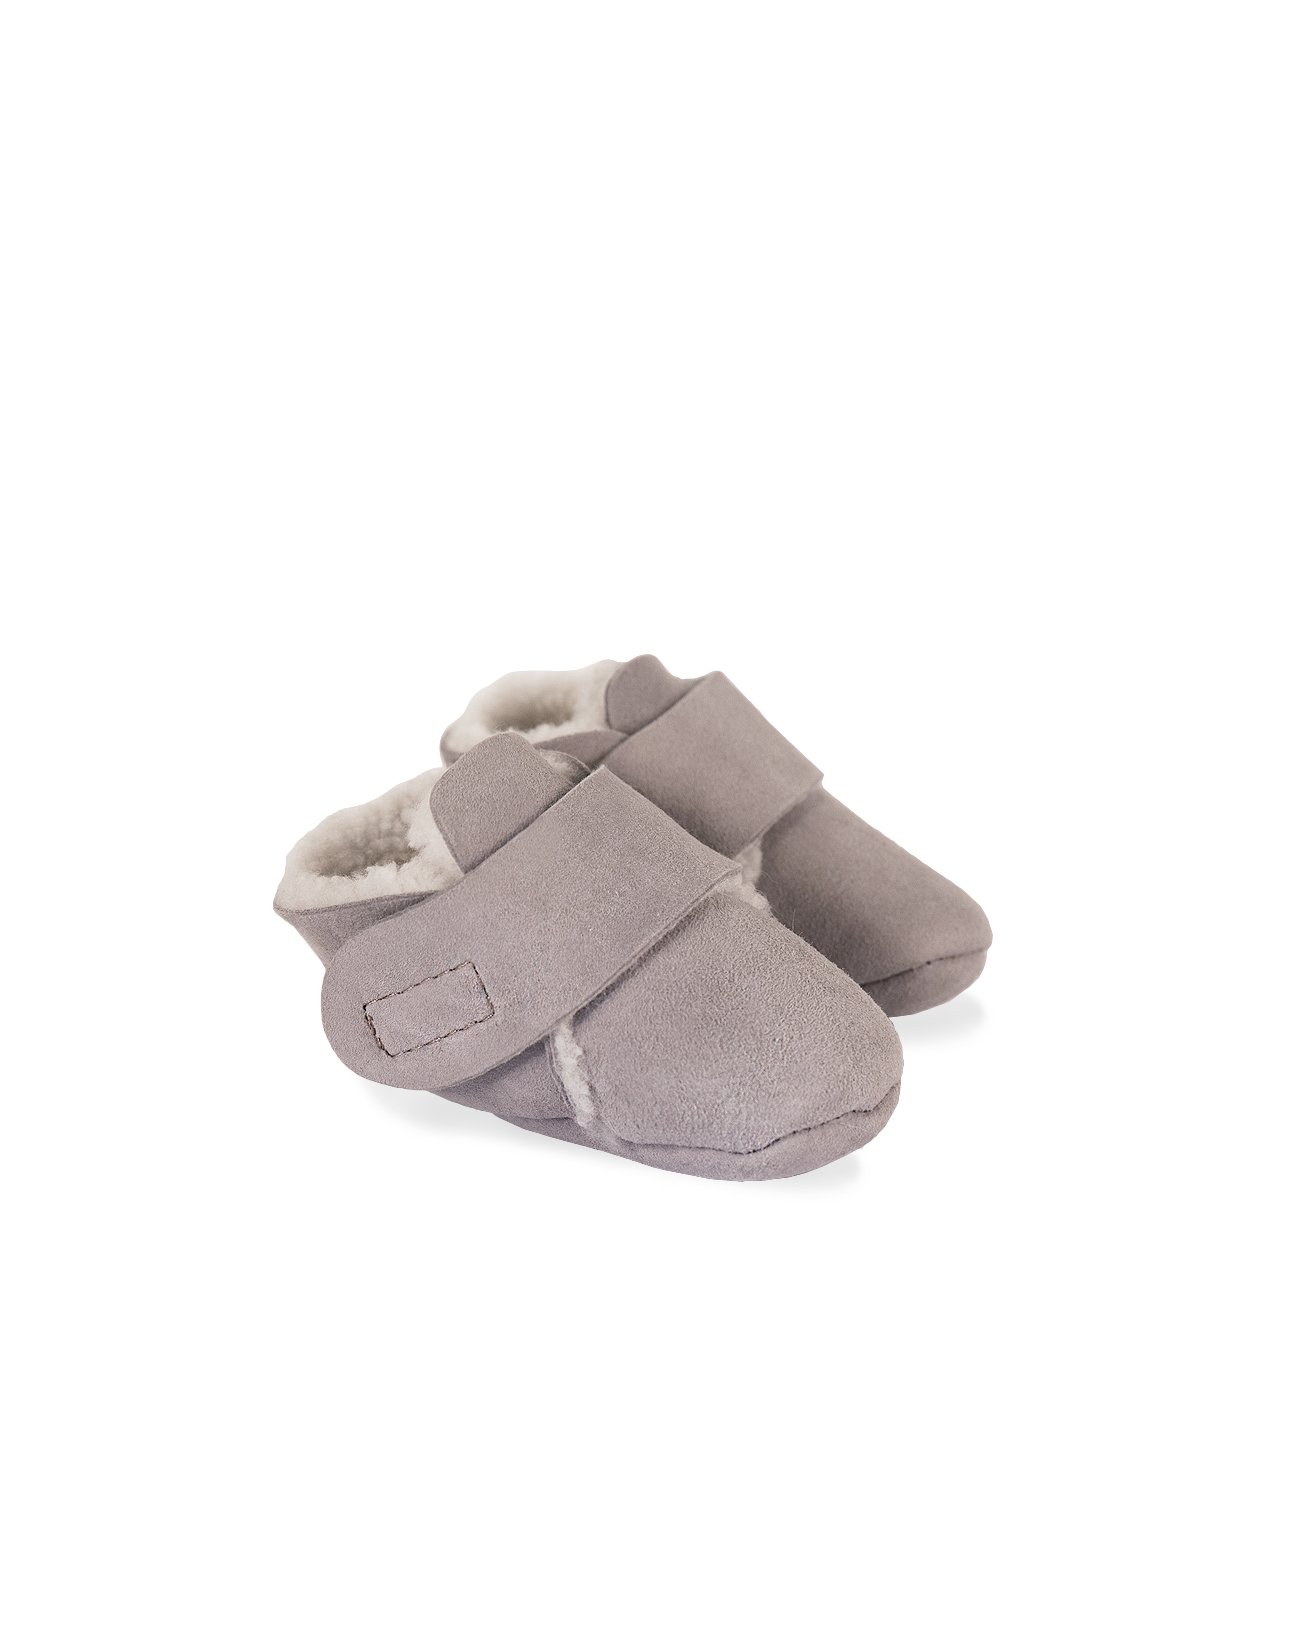 Sheepskin Crawler Shoes / Light Grey / One Size 